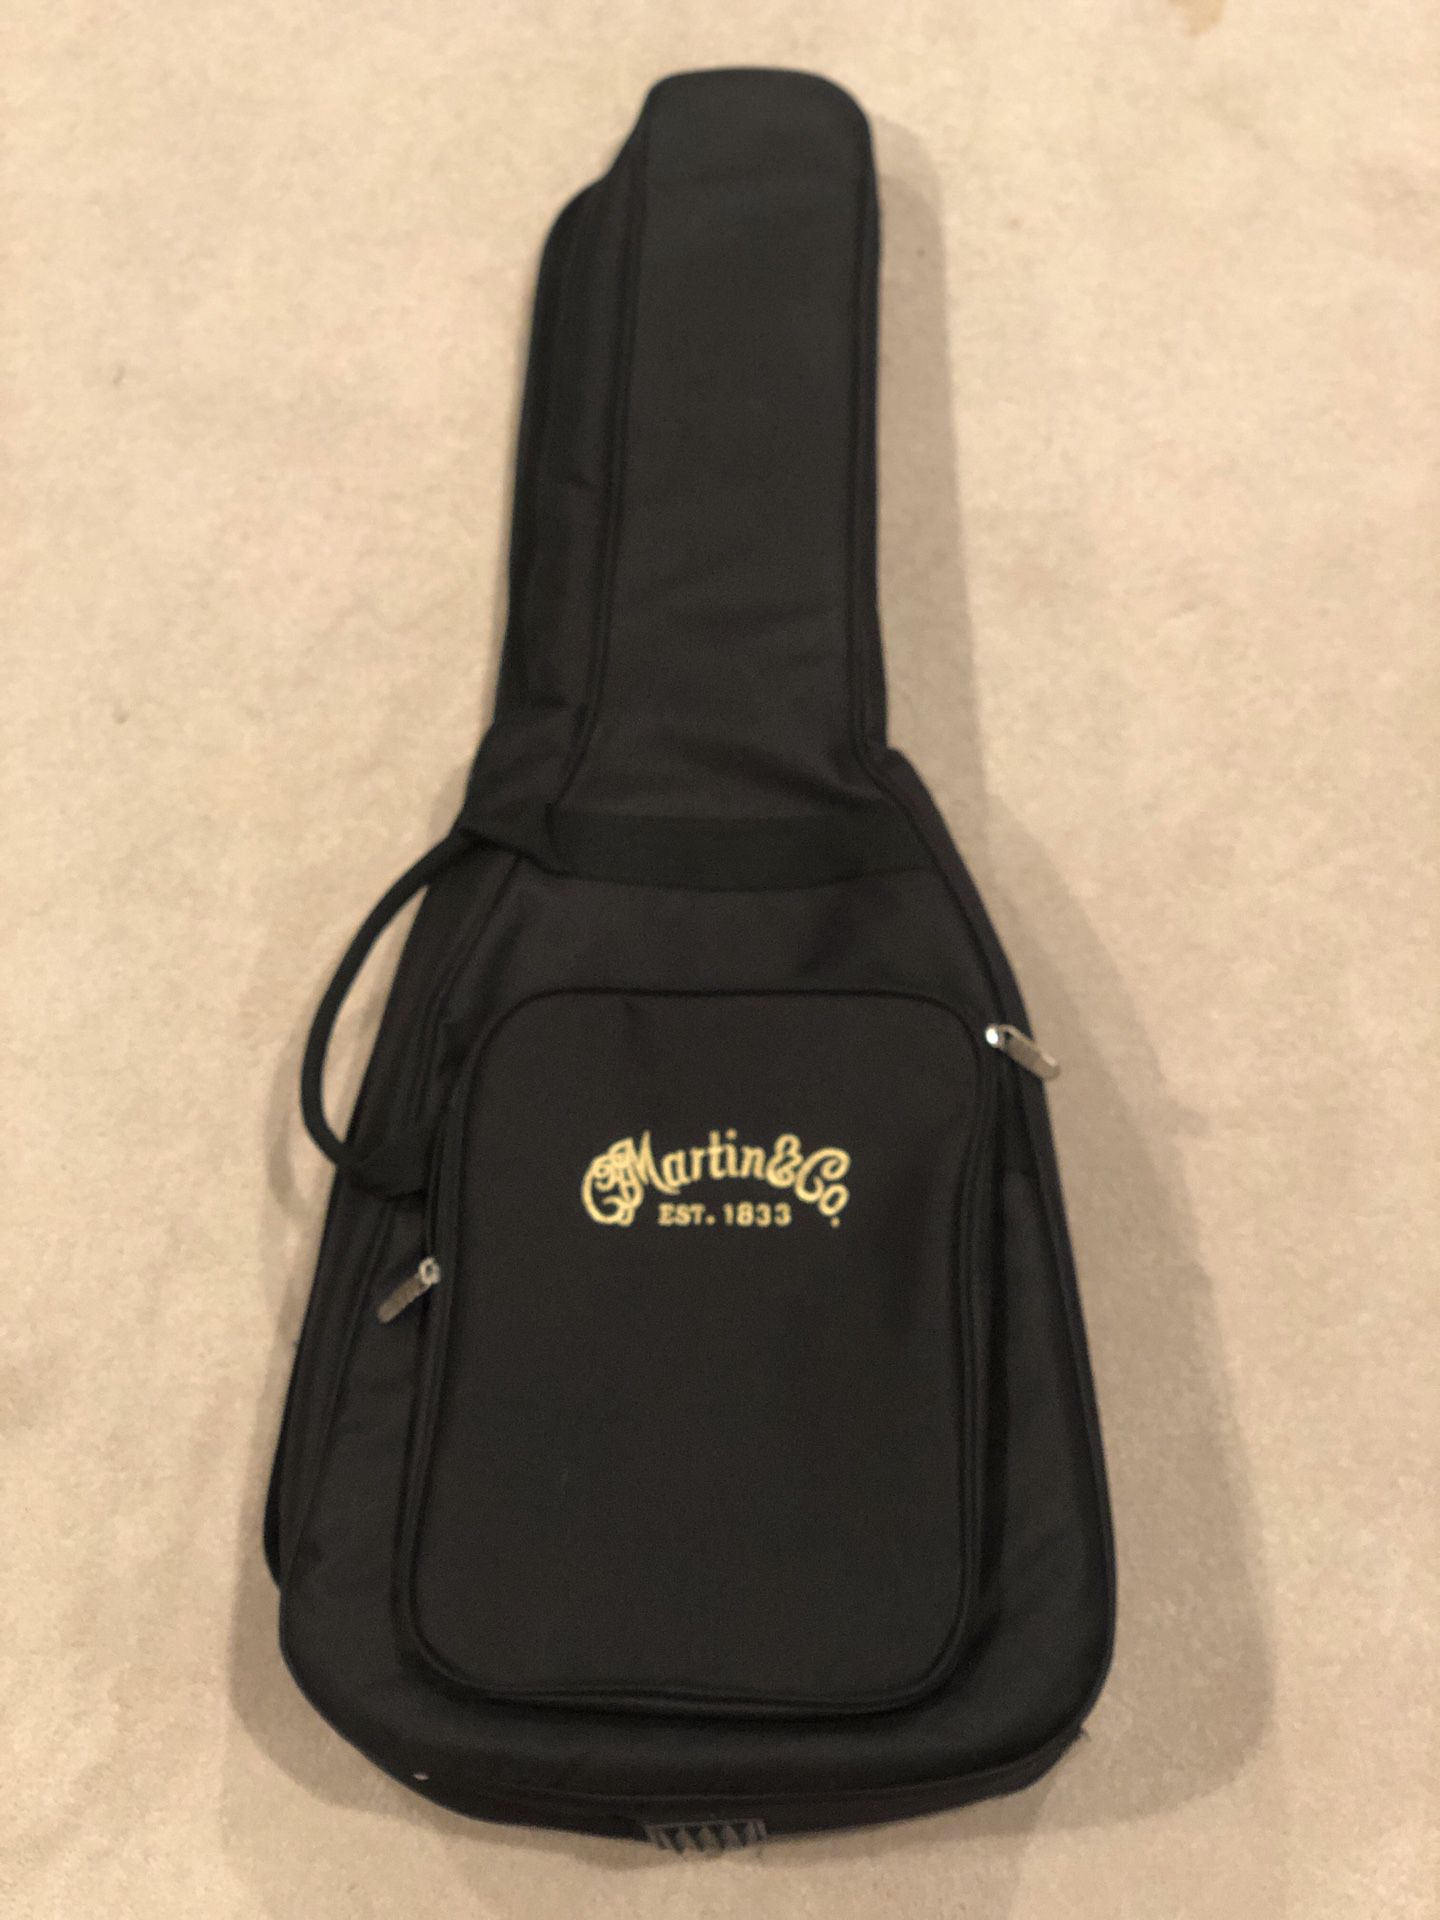 Martin&Co Small Guitar Bag